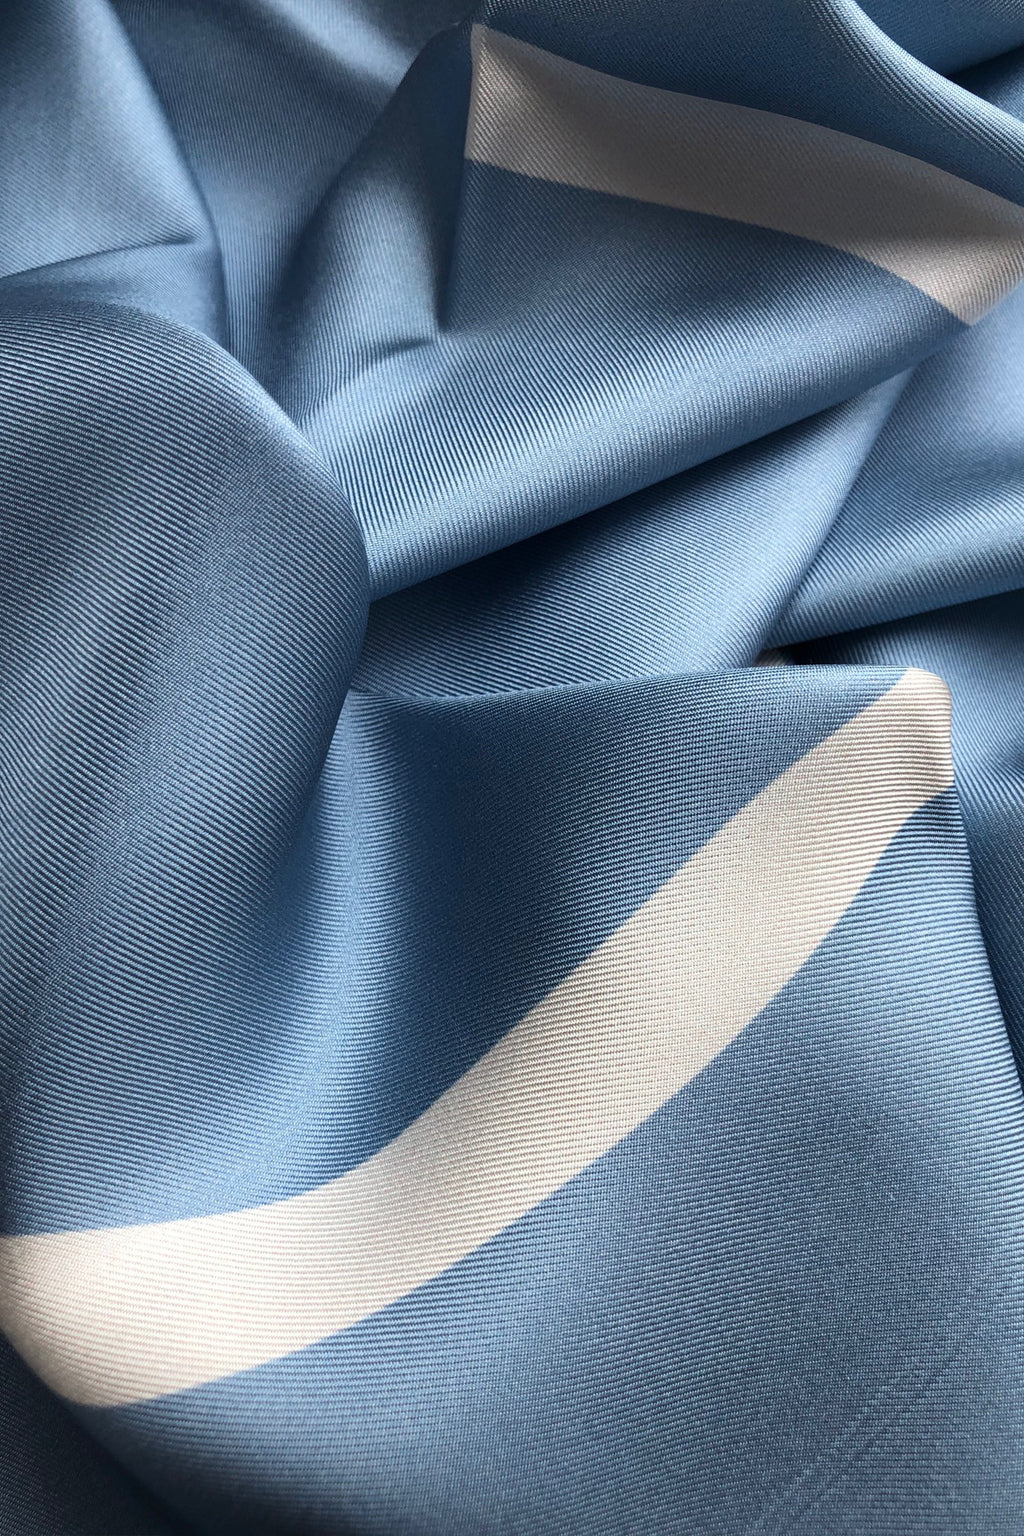 Icon Scarf, light blue silk